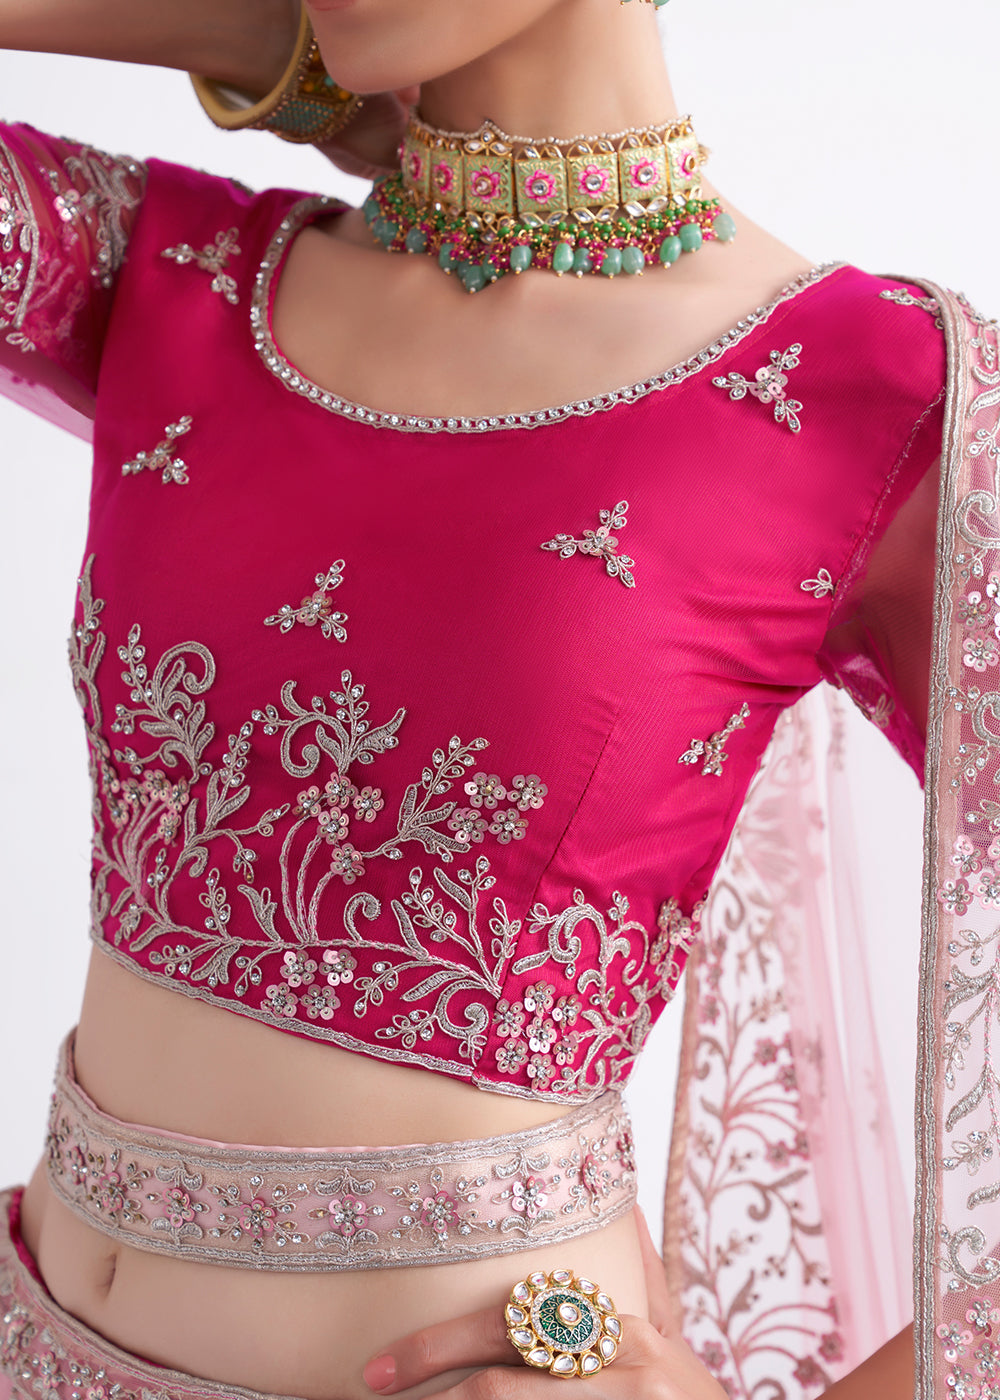 Buy Now Gorgeous Shaded Pink Heavy Embroidered Bridal Lehenga Choli Online in USA, UK, Canada & Worldwide at Empress Clothing.